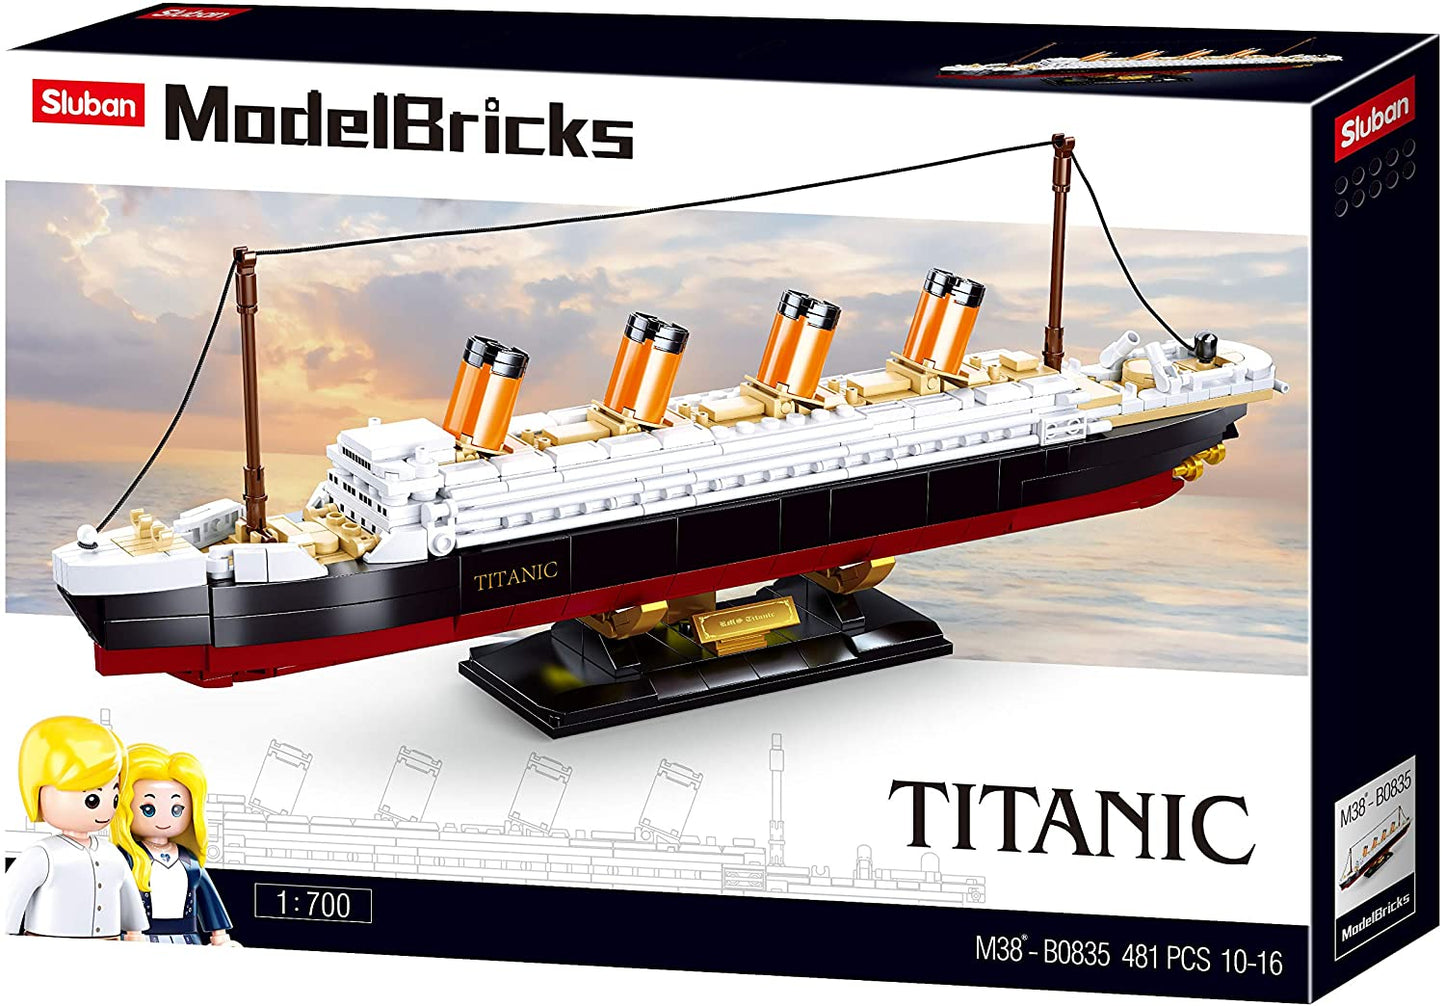 Sluban Titanic - Middle M38-B0835